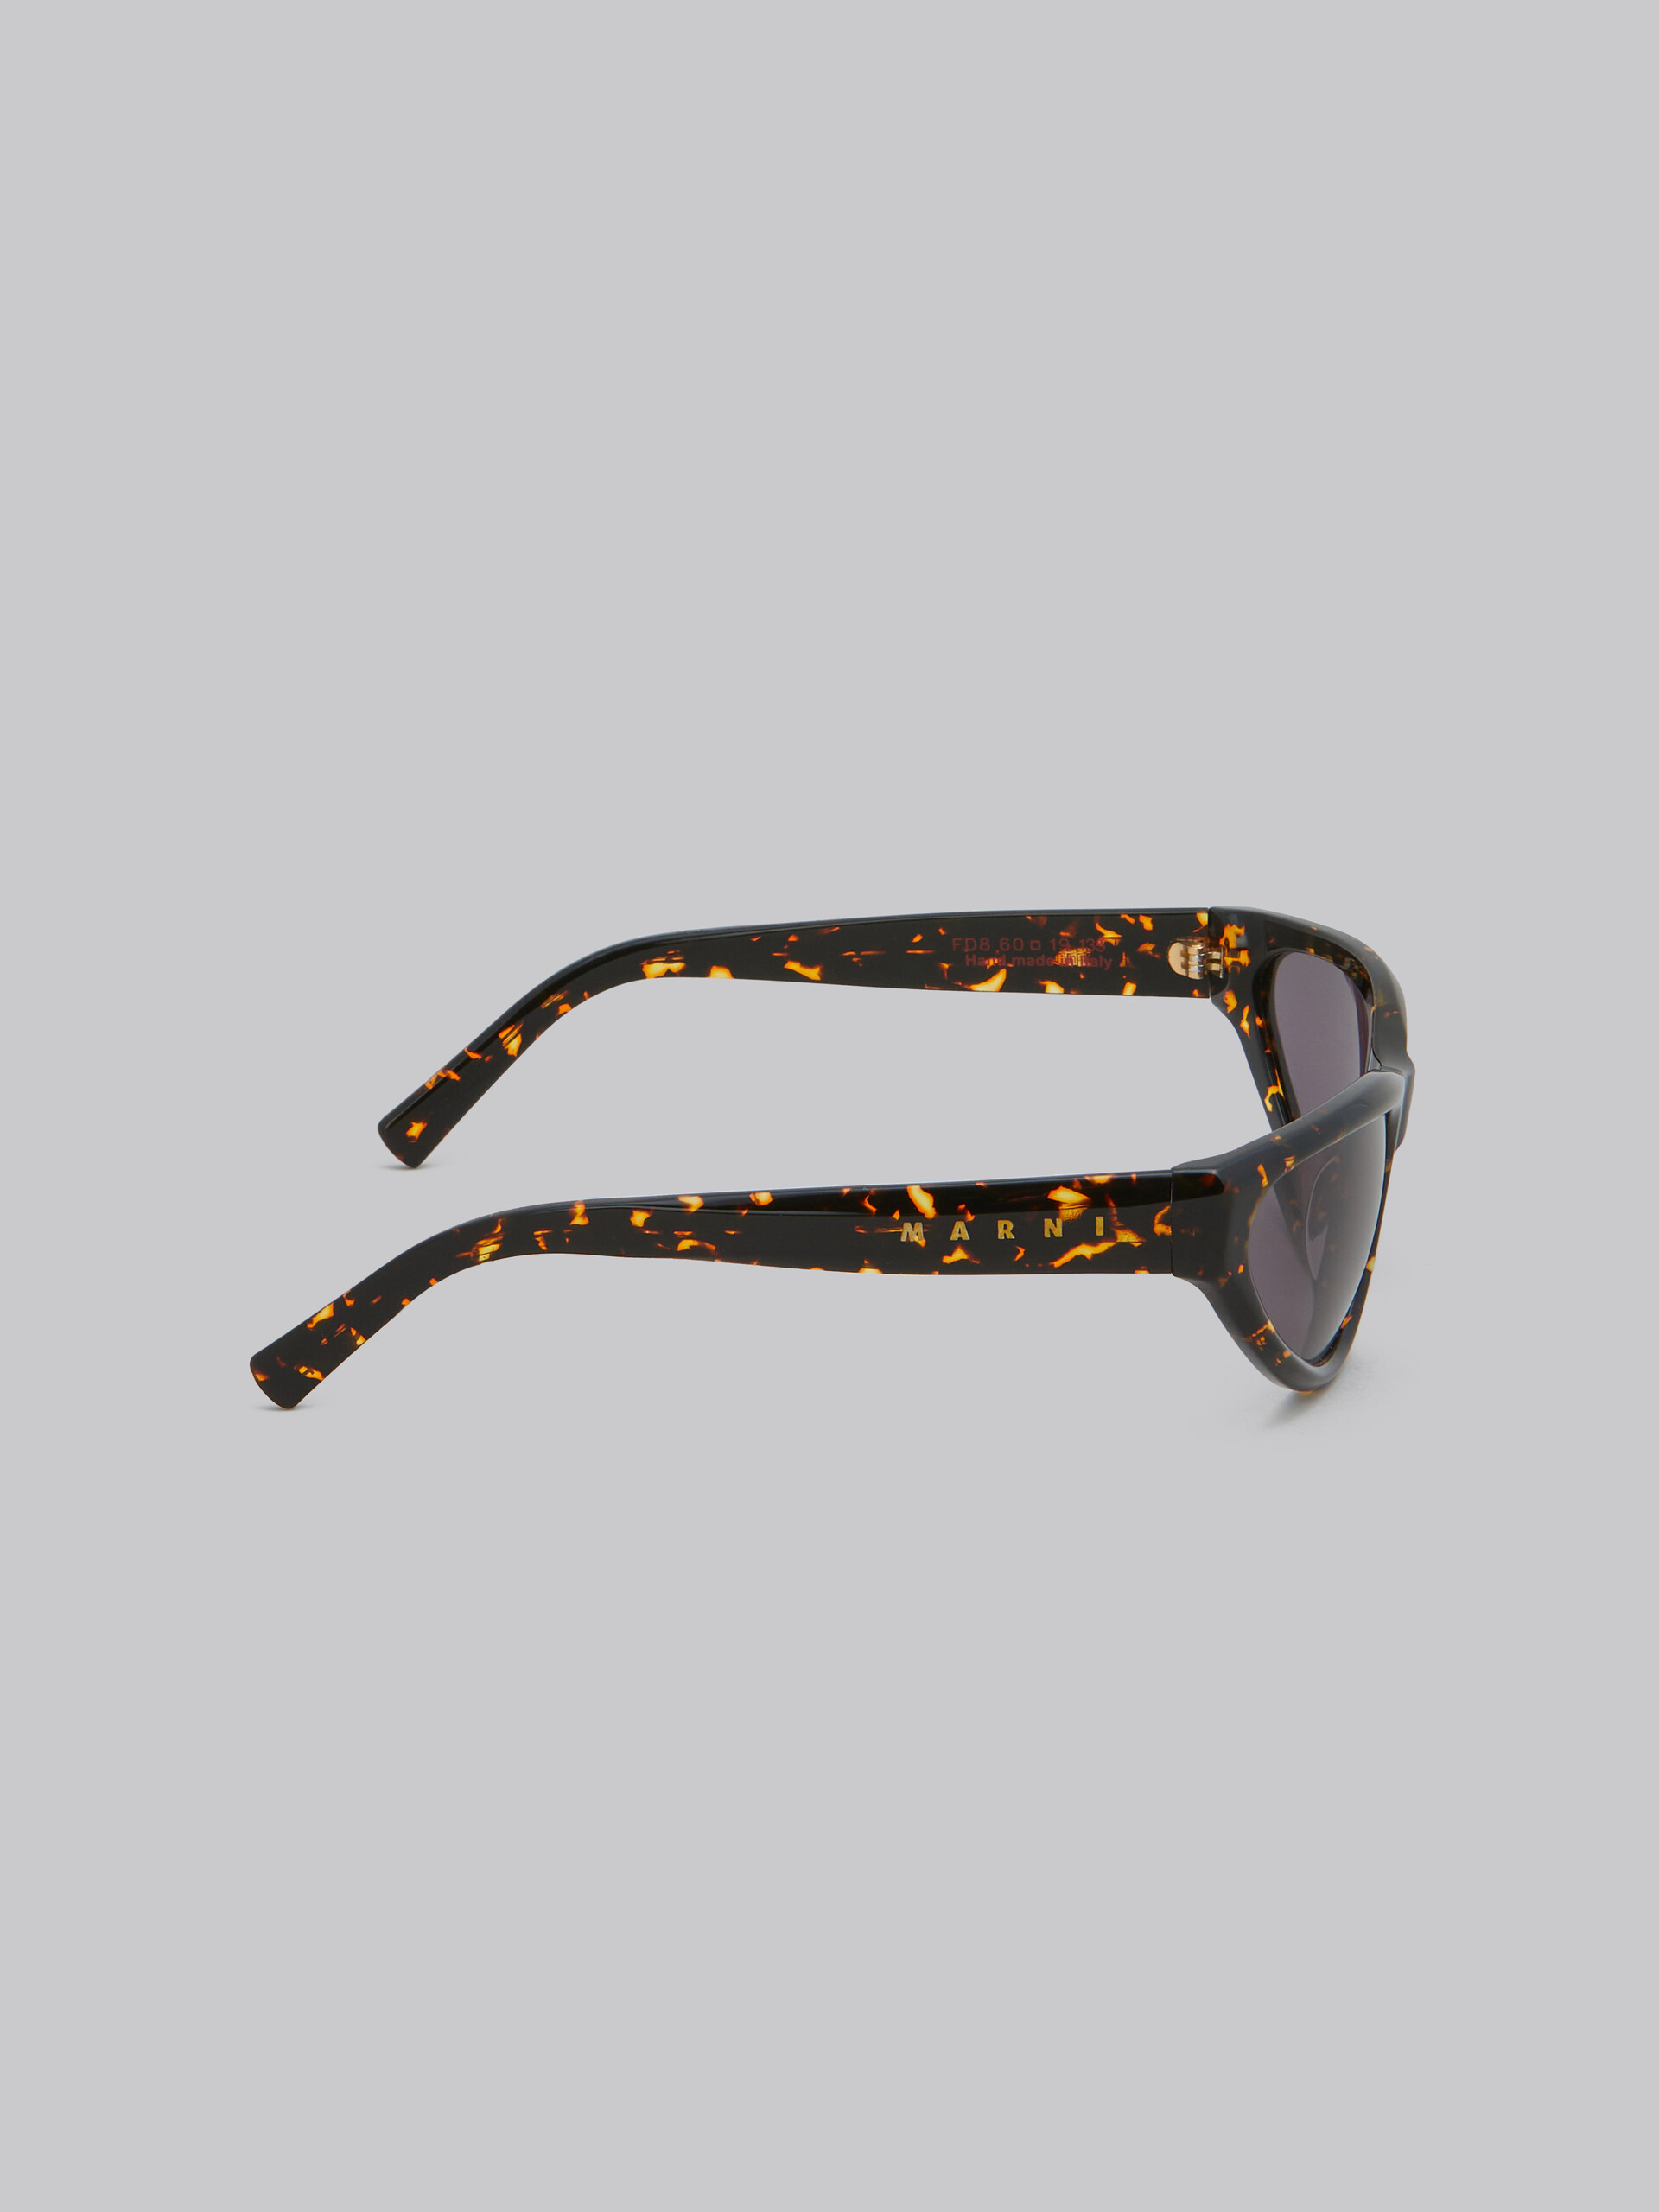 Red Mavericks sunglasses - Optical - Image 4